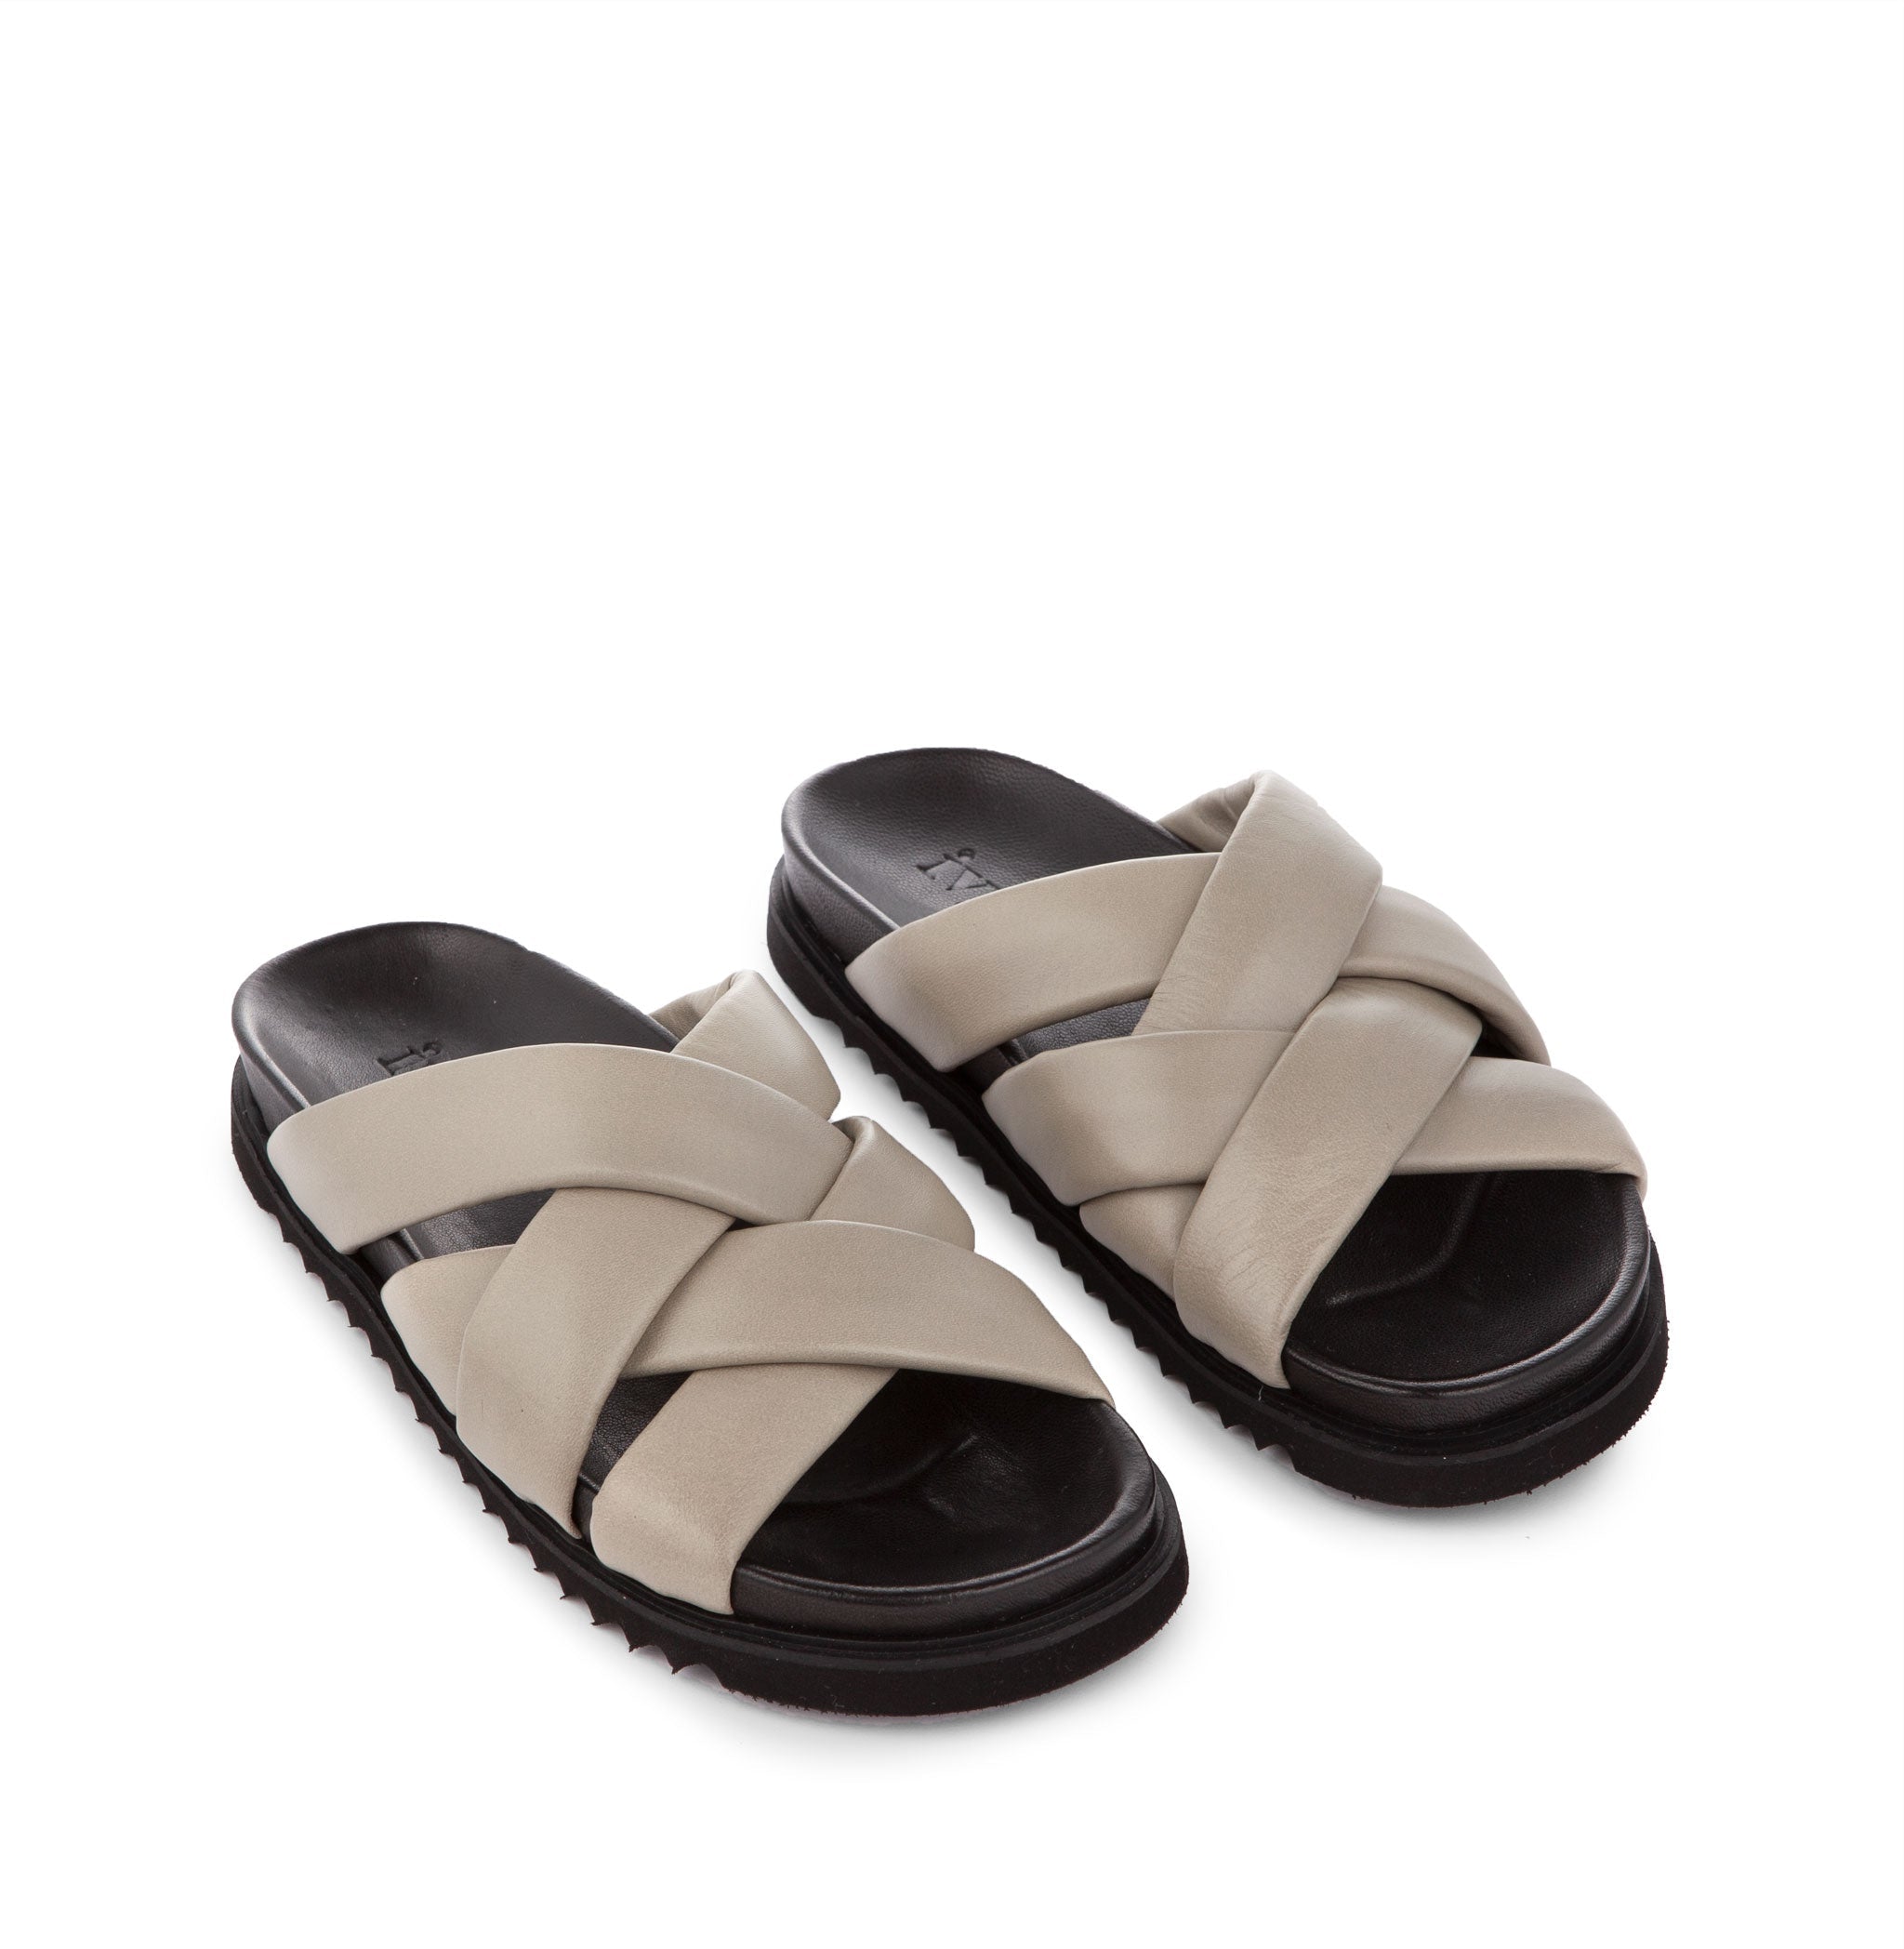 Josie Stone Grey Leather Sandals 11-044-012 - GREY - 3